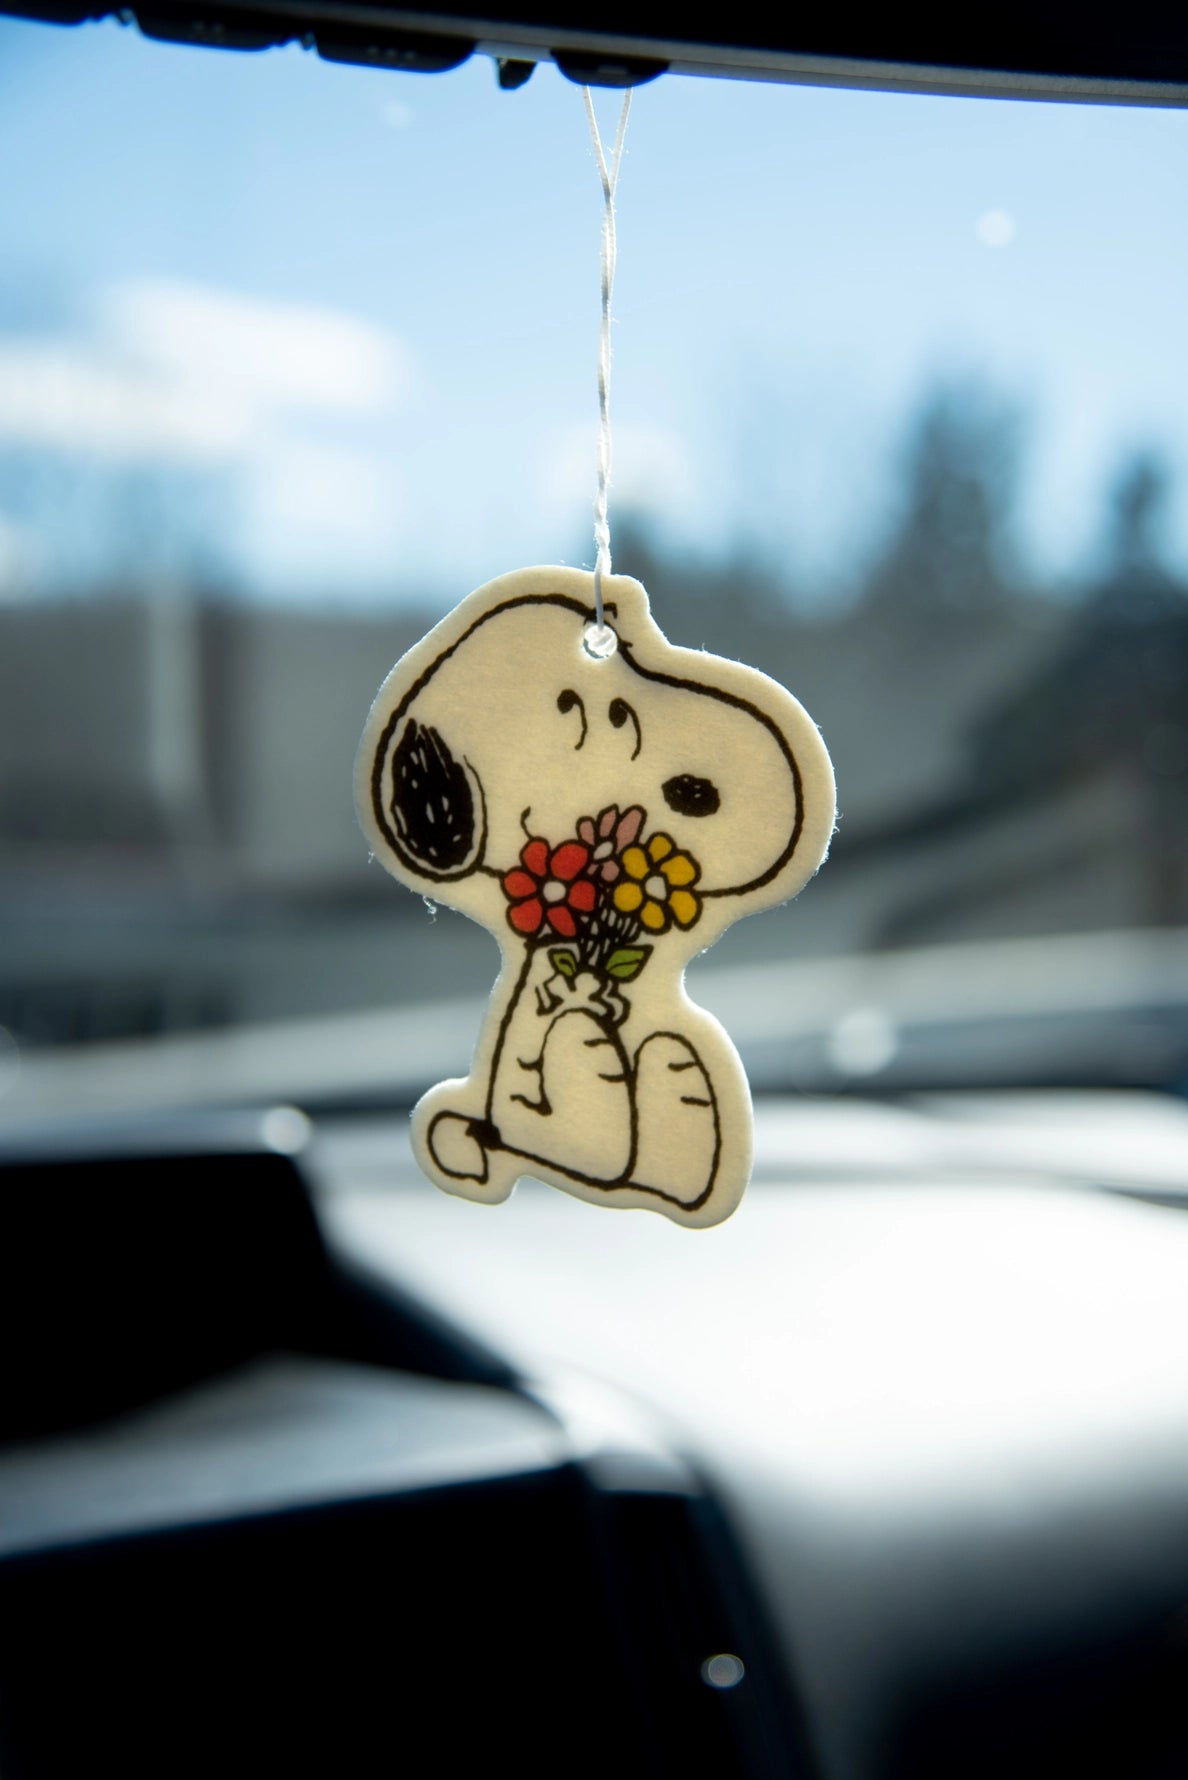 Snoopy Air Freshener ‘Flower Bouquet’ - Summer Nights Scent